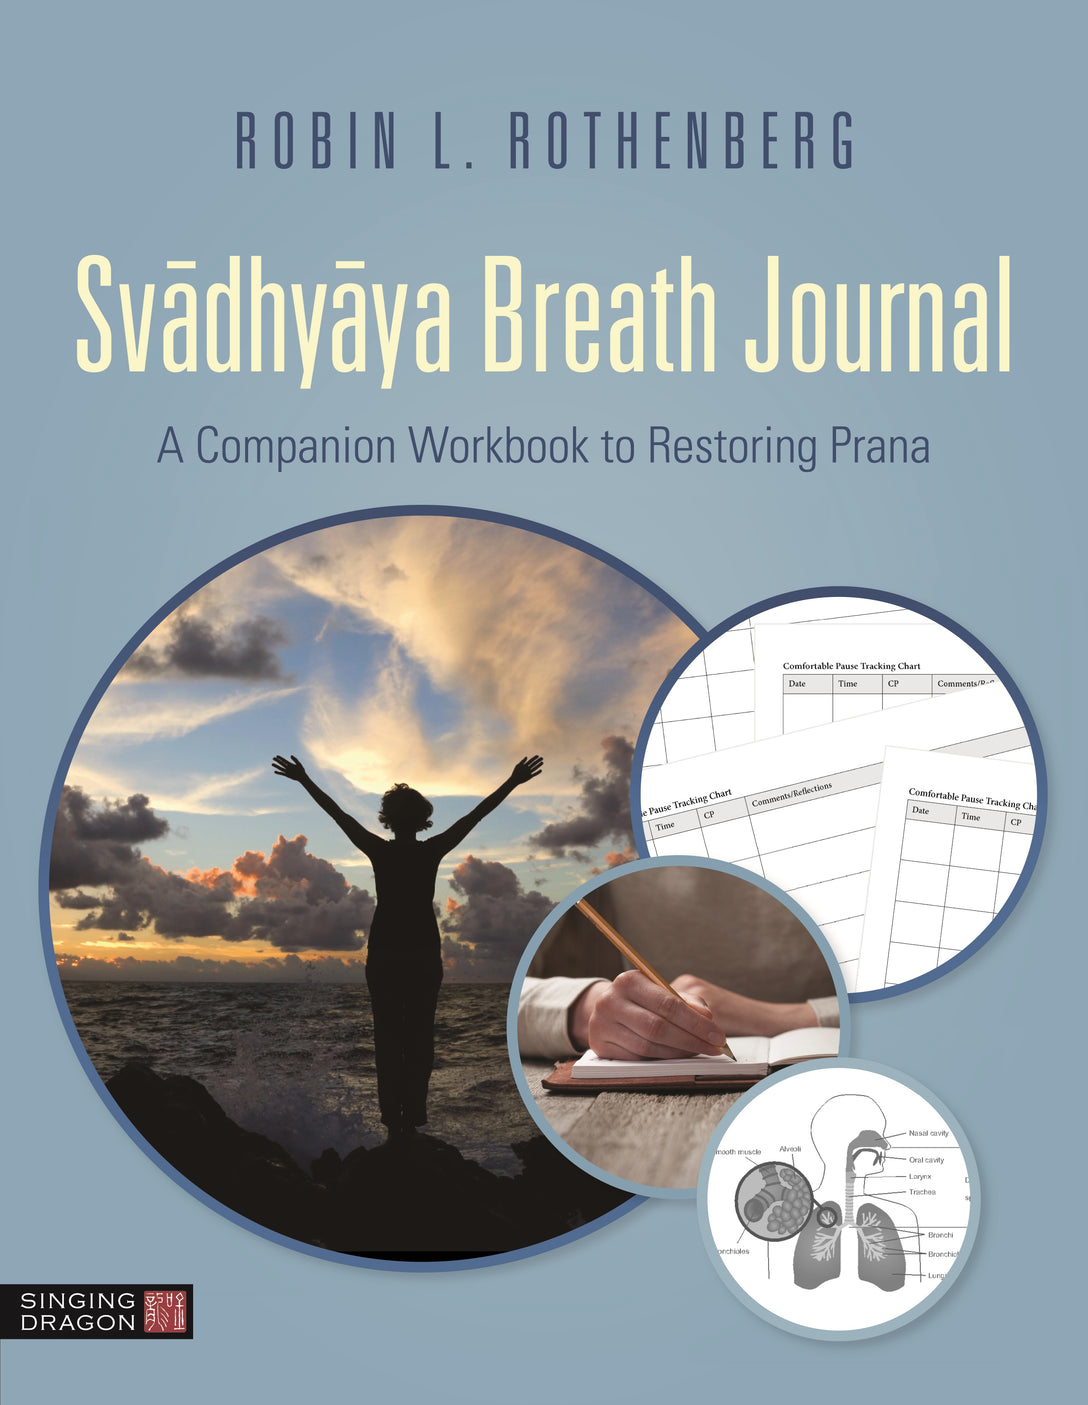 Svadhyaya Breath Journal by Robin L. Rothenberg